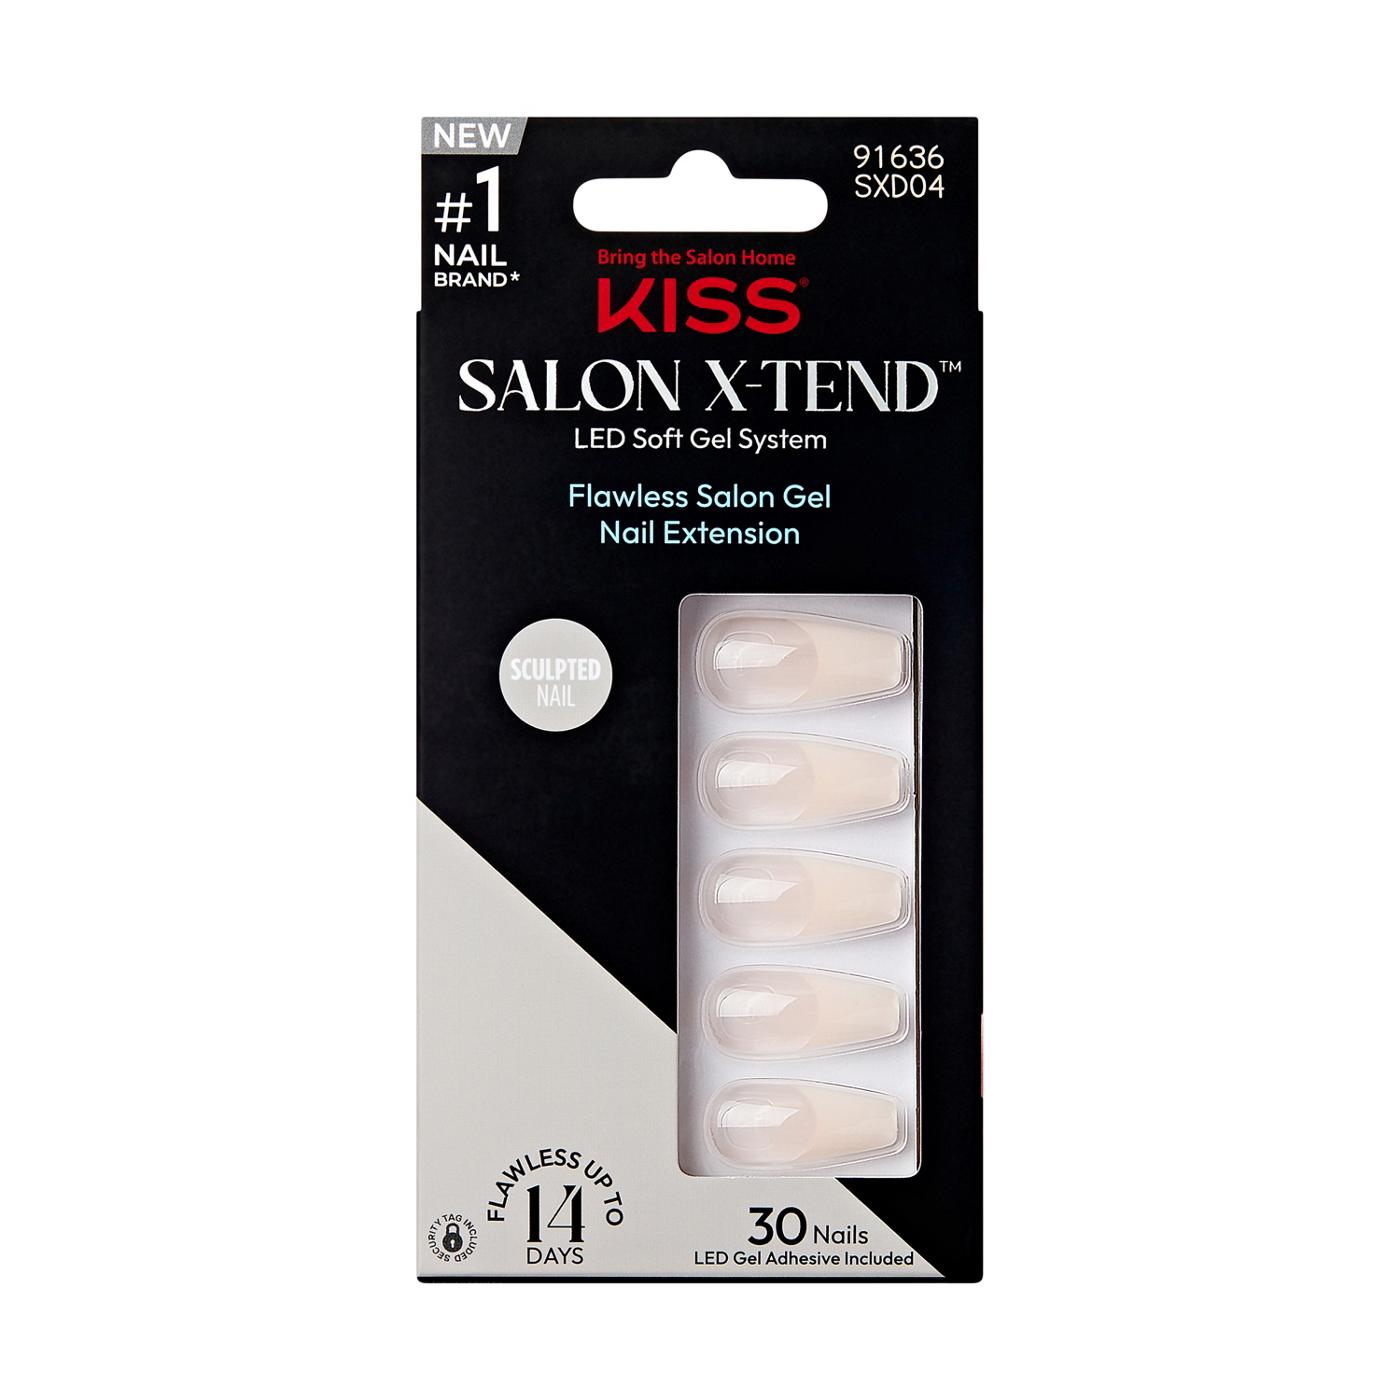 KISS Salon X-tend LED Soft Gel System - Trust Fall; image 1 of 6